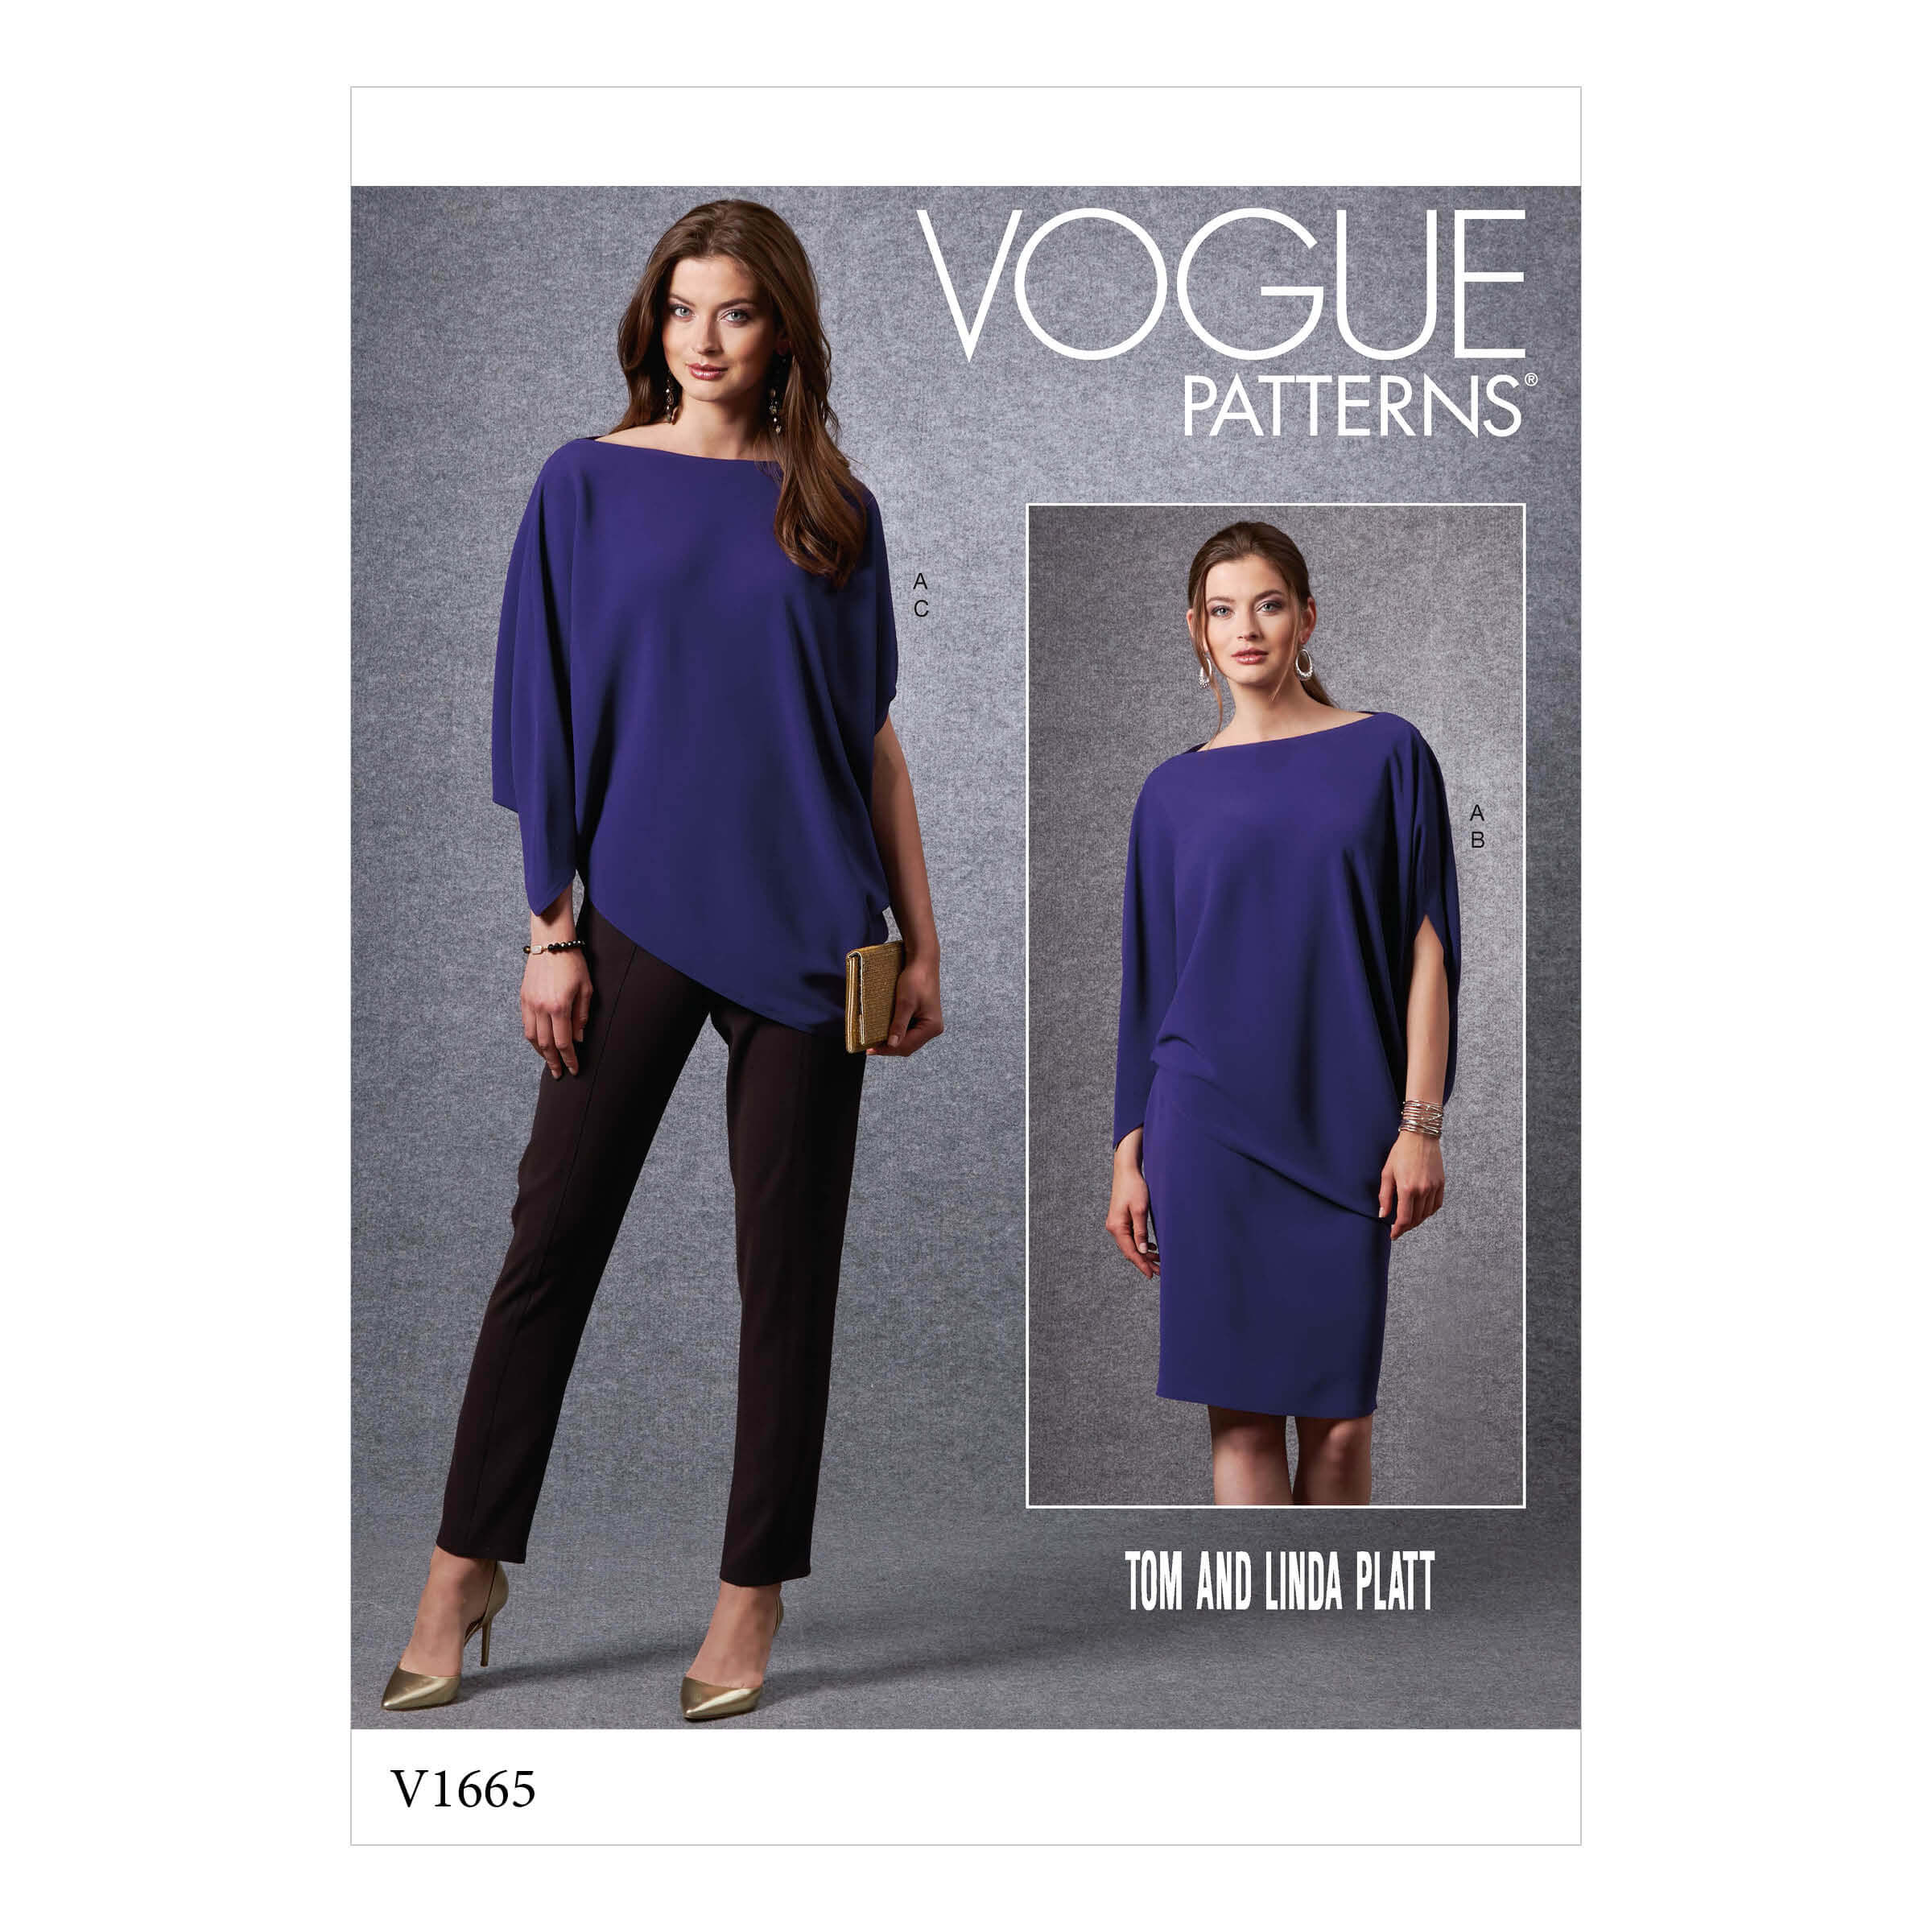 Vogue Patterns V1665 Misses Co-ordinates, Tom and Linda Platt